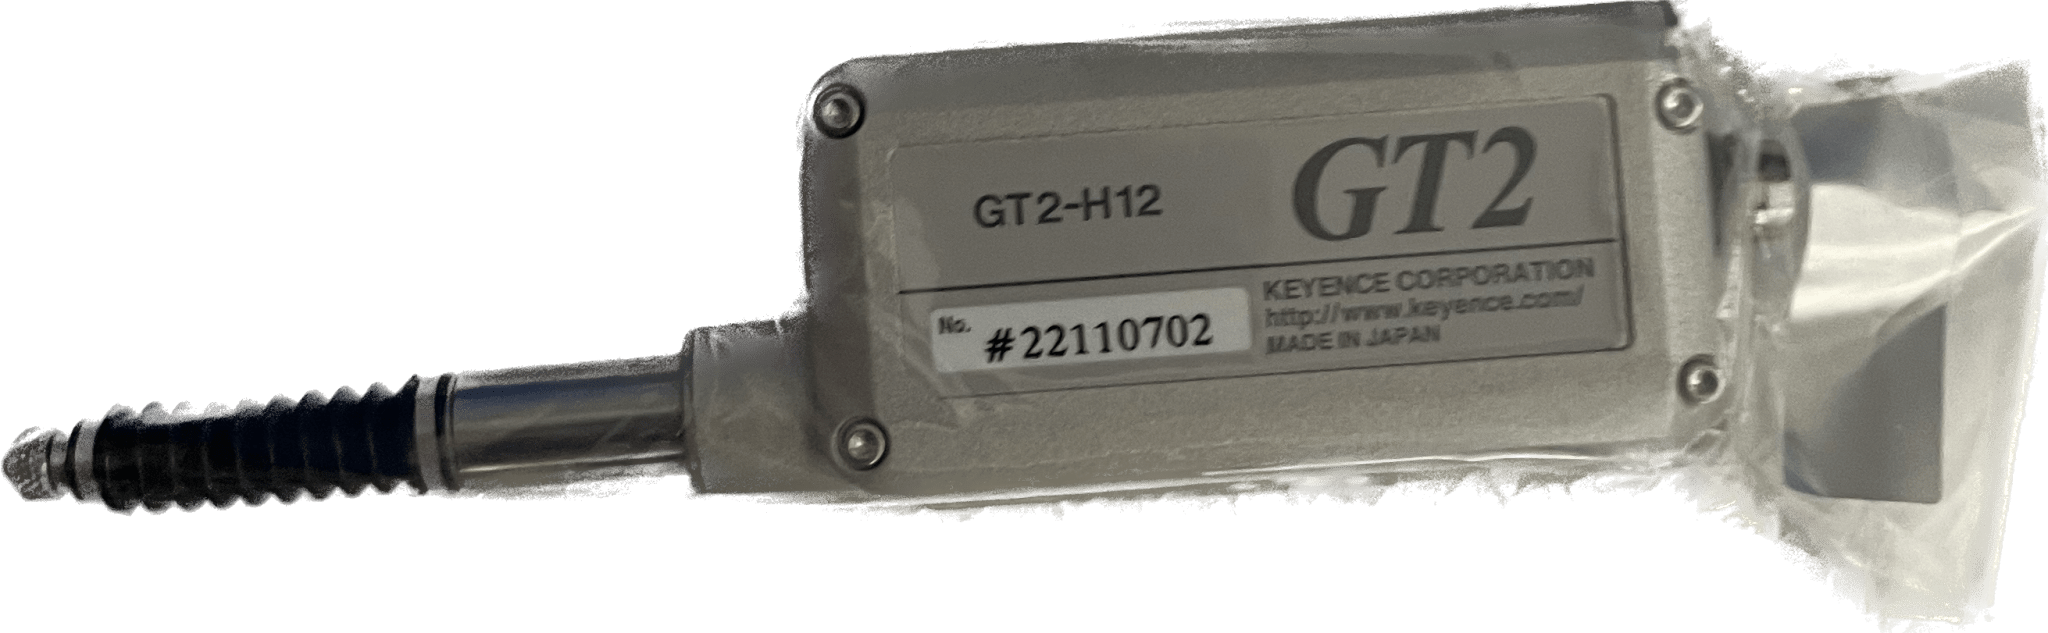 Keyence GT2-H12 - #product_category# | Klenk Maschinenhandel